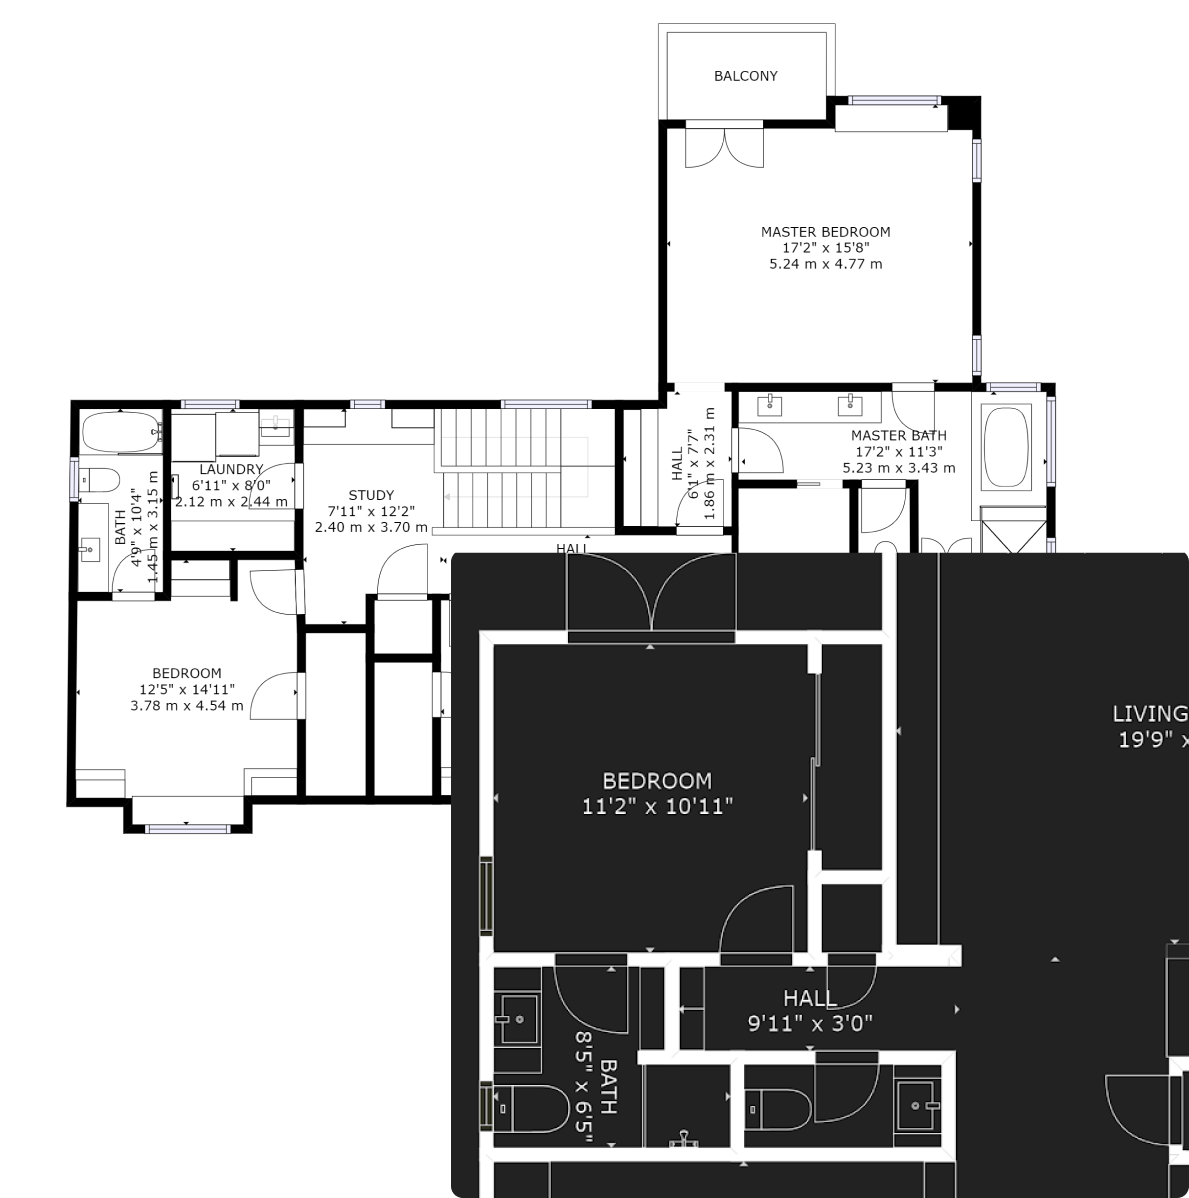 Image showing floor plans